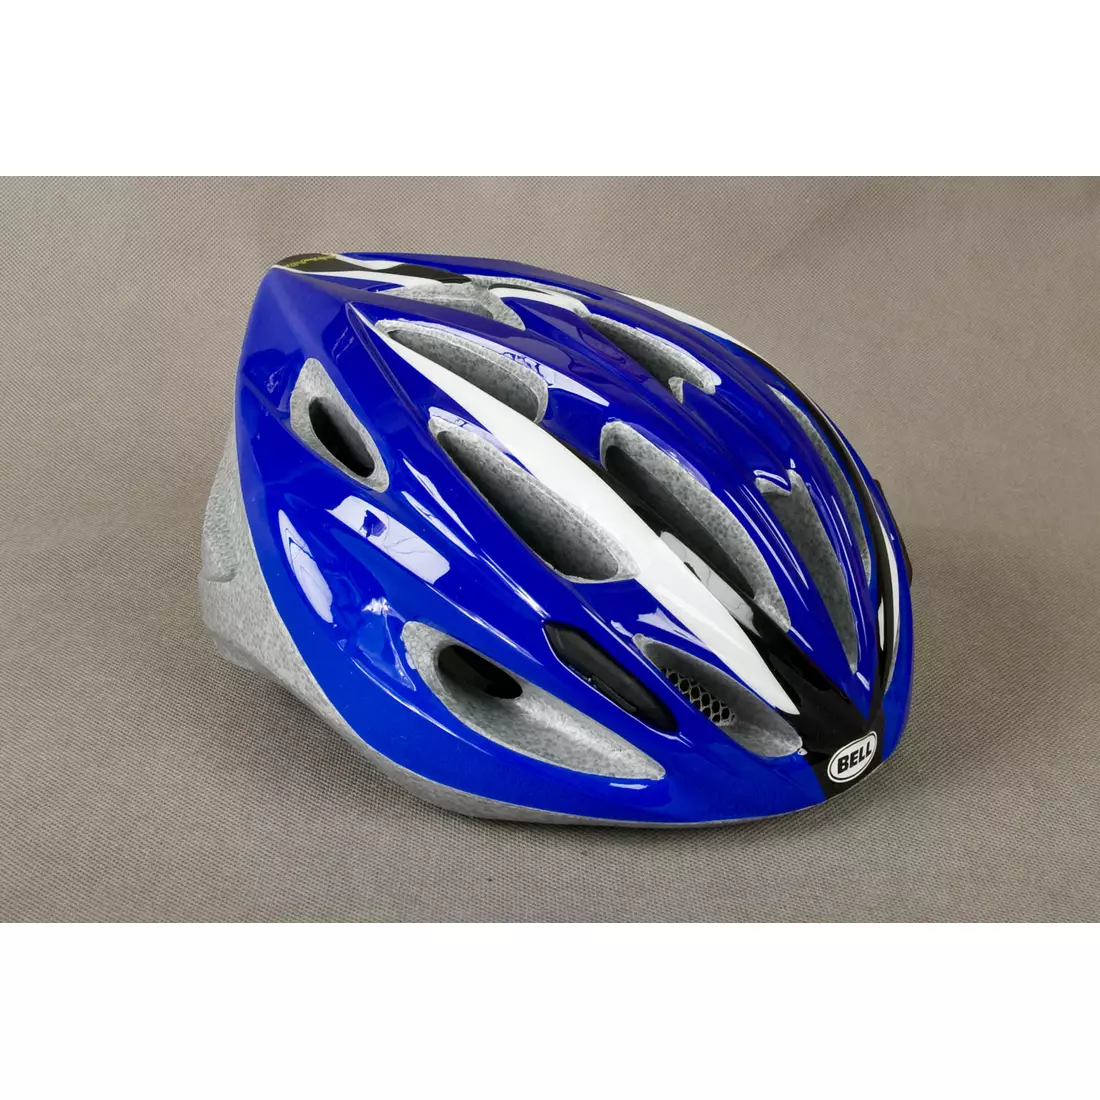 Casca de bicicleta BELL SOLAR alb albastru